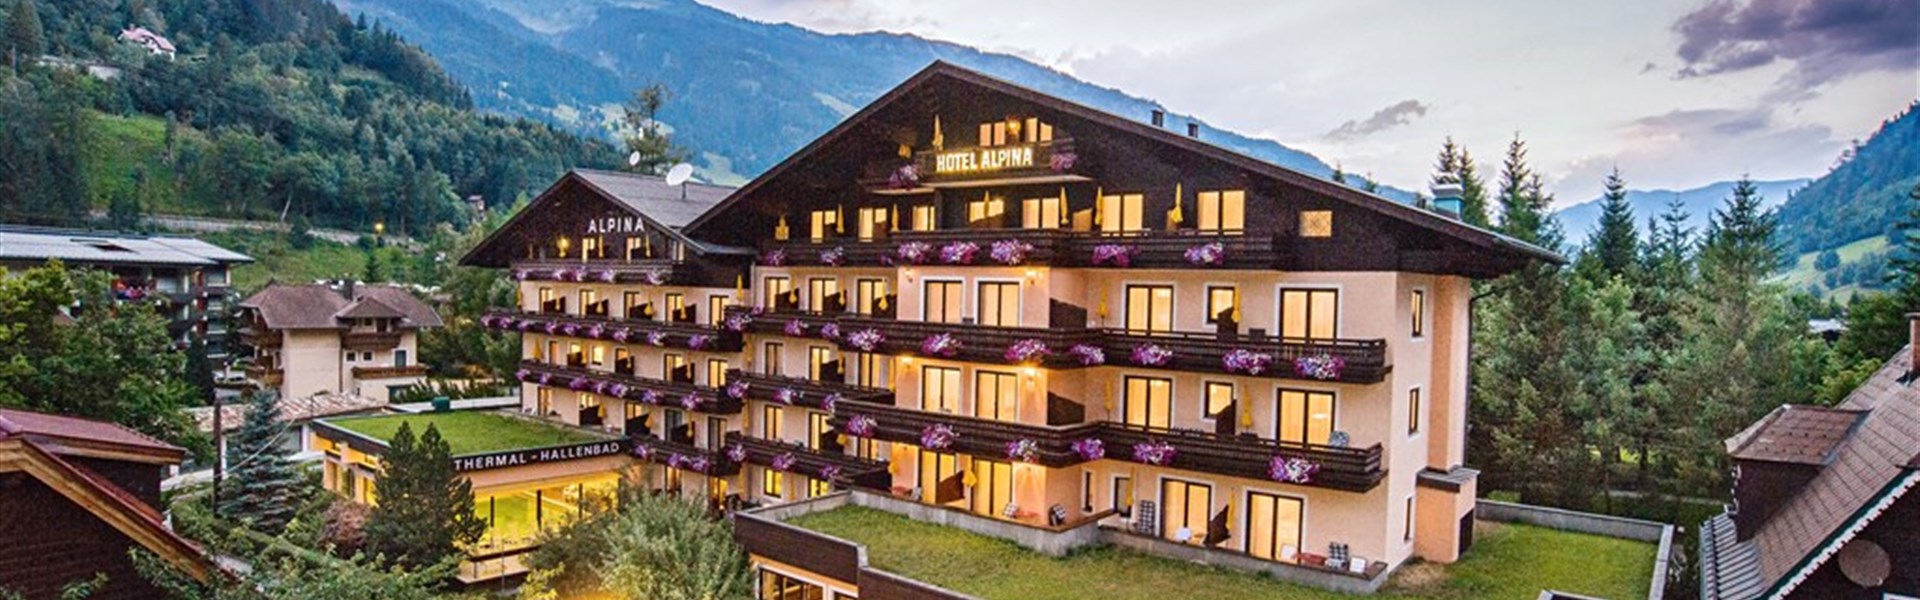 Marco Polo - Hotel Alpina (S) - 